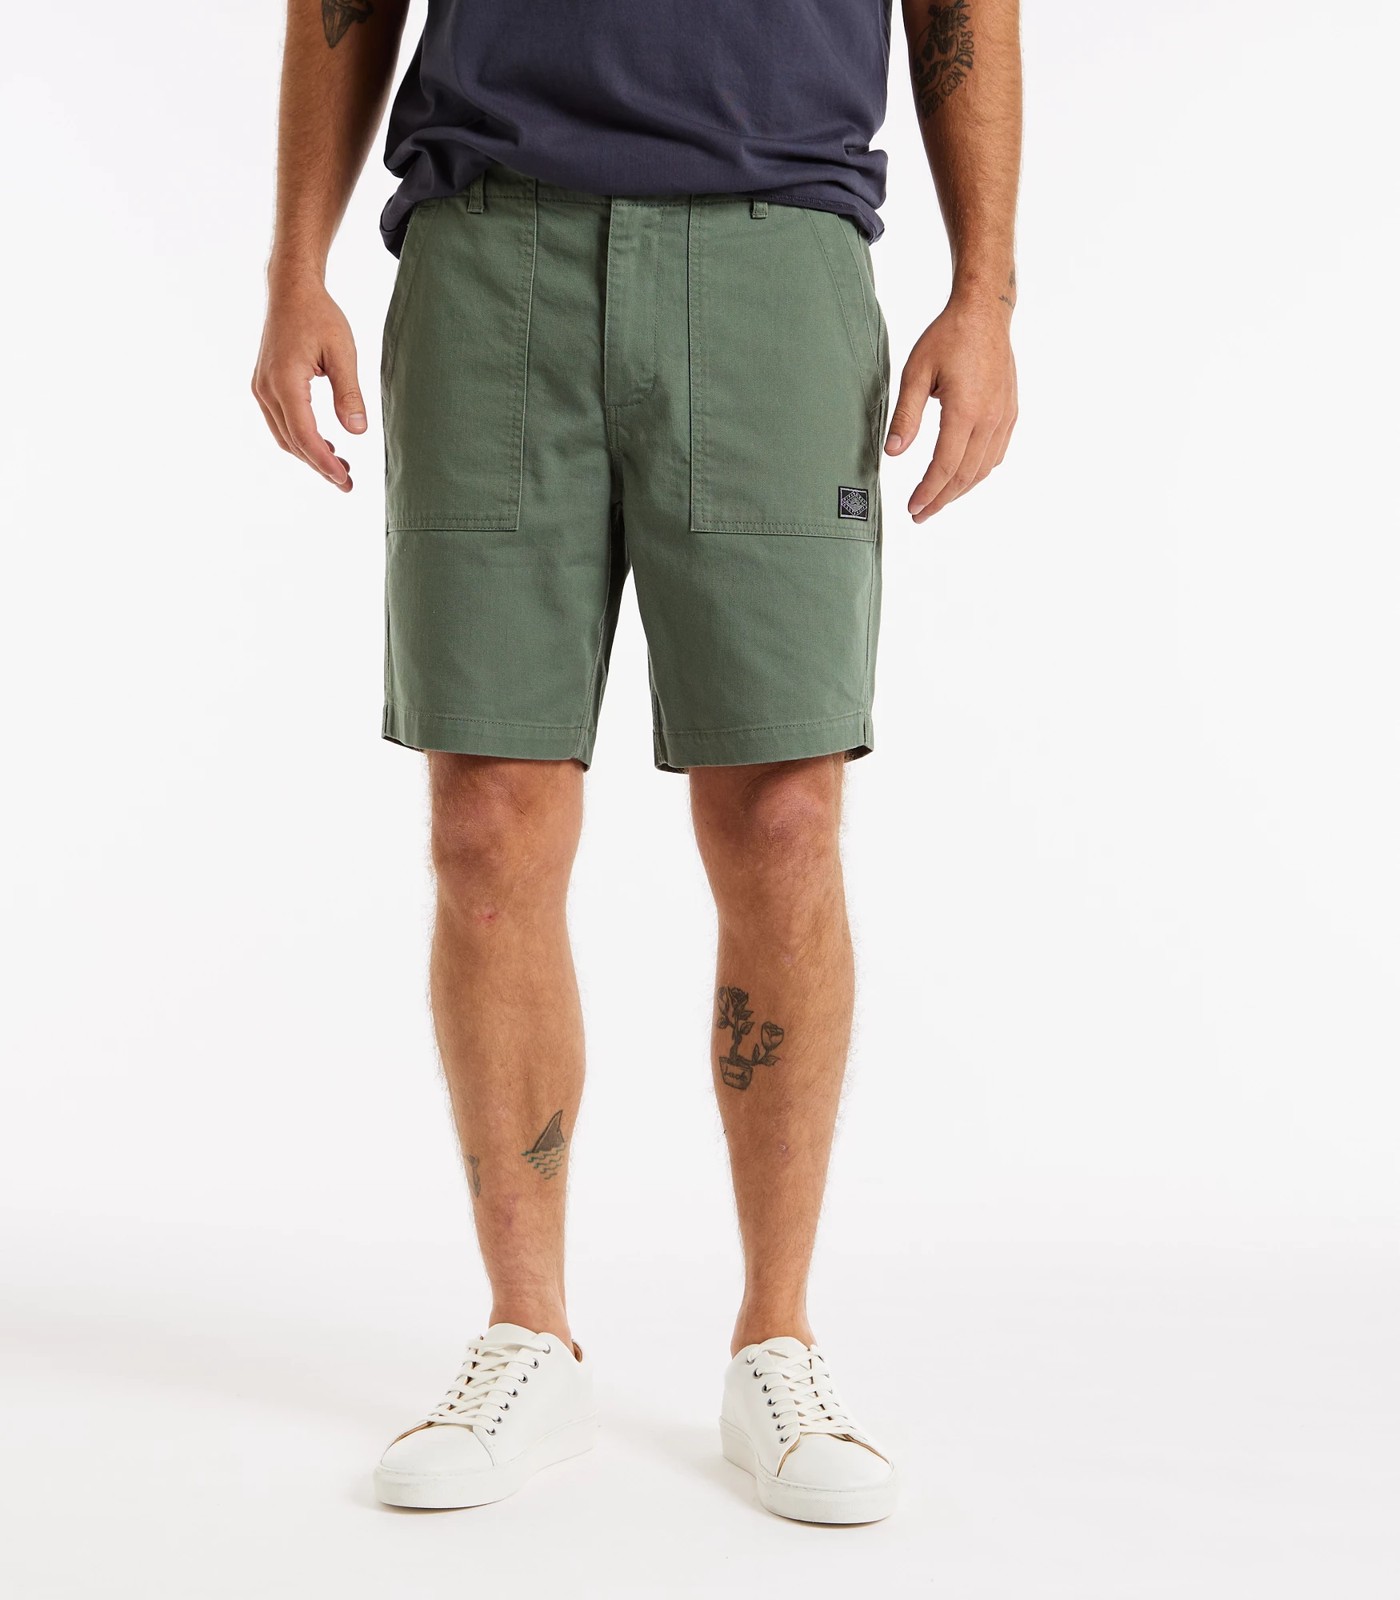 Piping Hot Woven Shorts | Target Australia